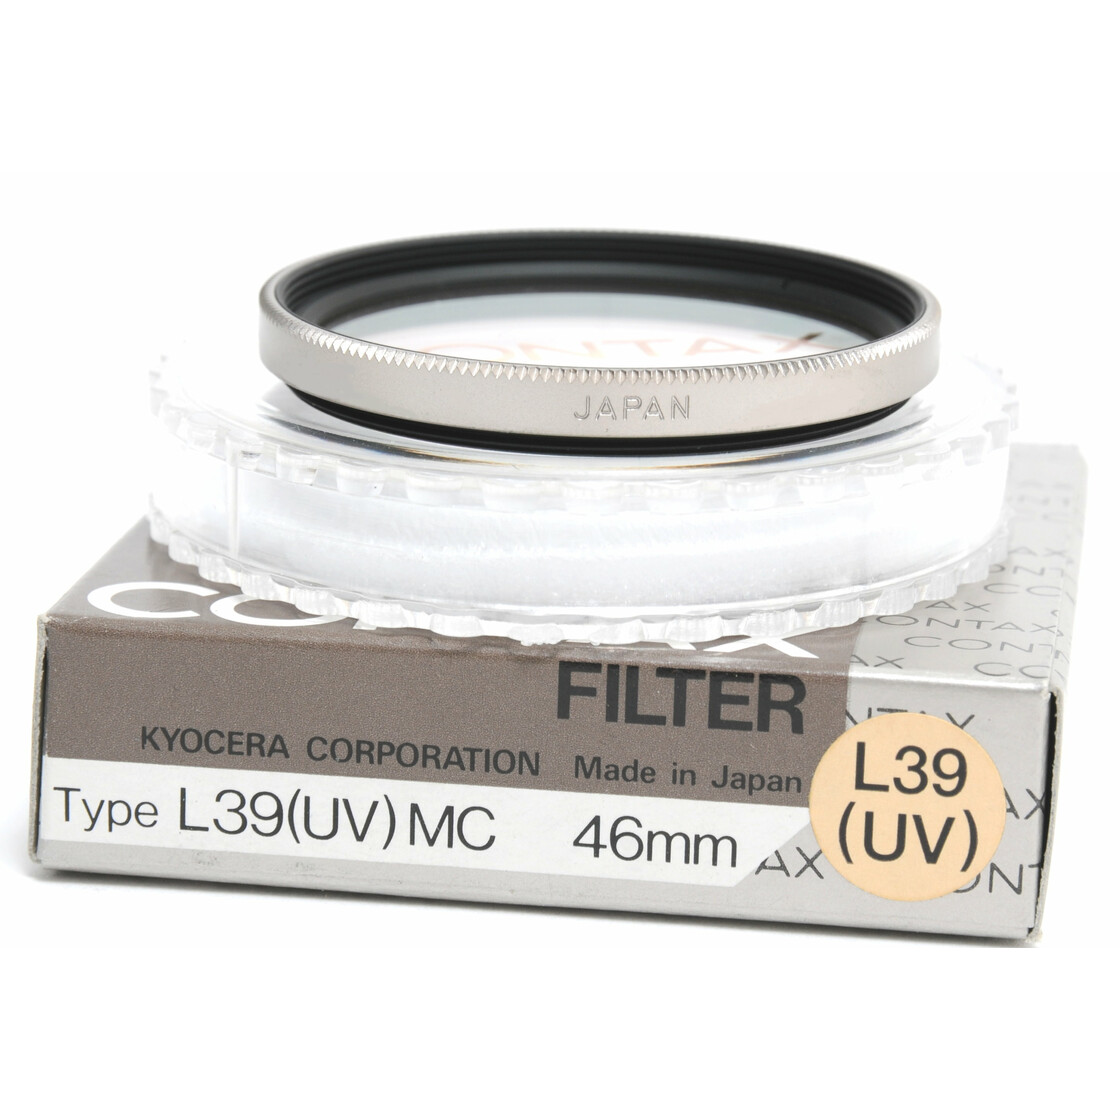 Contax Filter Type L39 UV MC 46mm original boxed Mint Condition